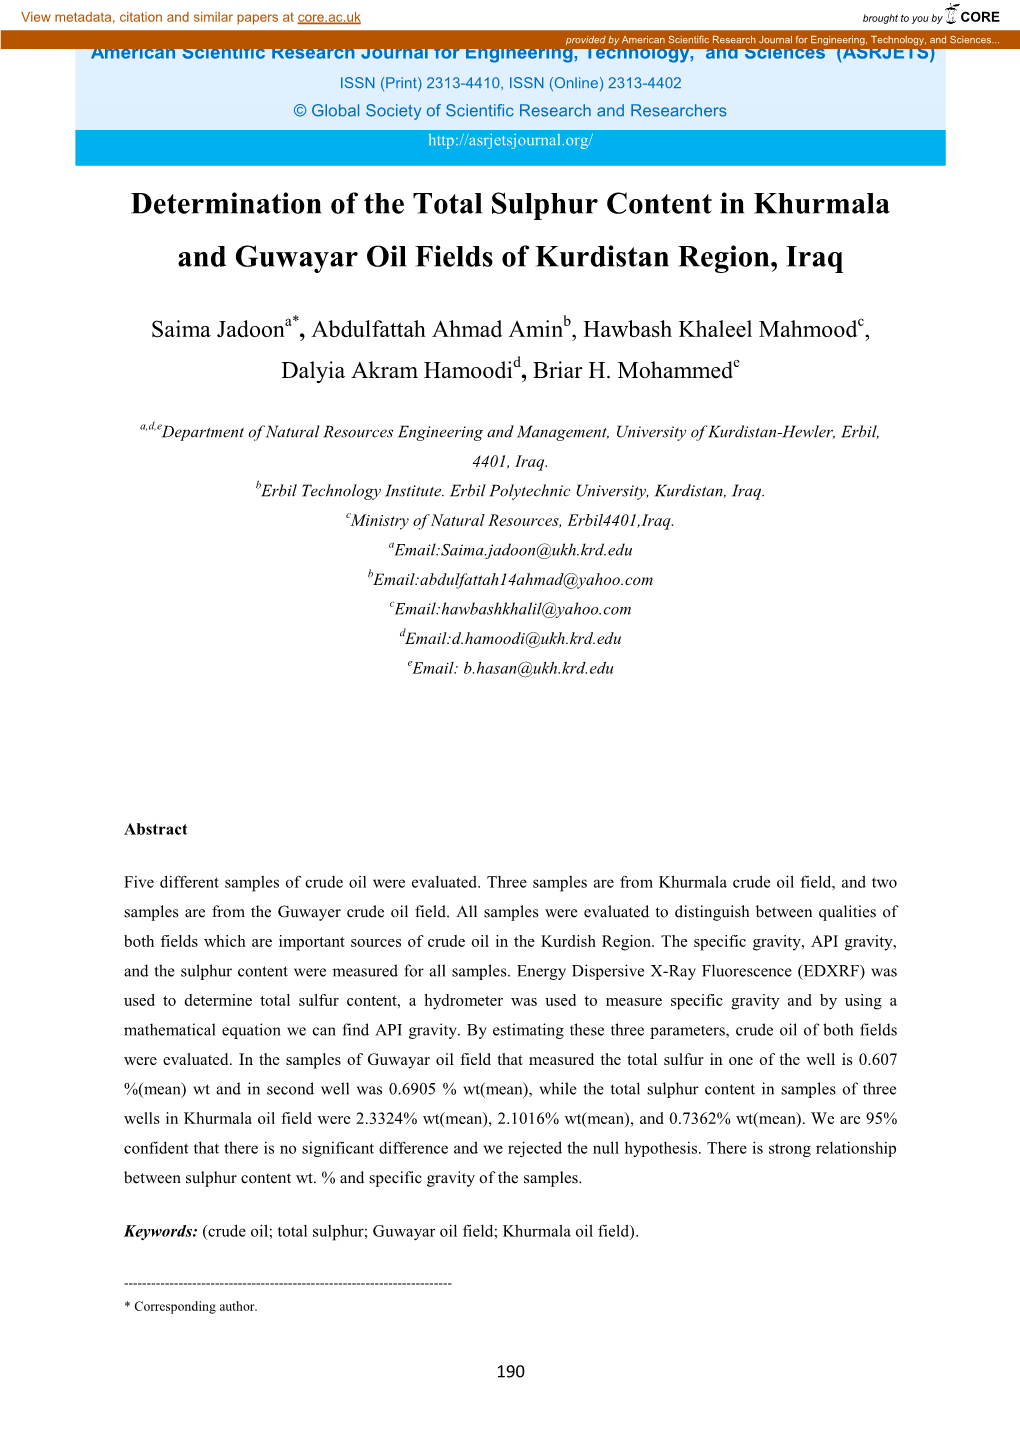 Determination of the Total Sulphur Content in Khurmala and Guwayar Oil Fields of Kurdistan Region, Iraq